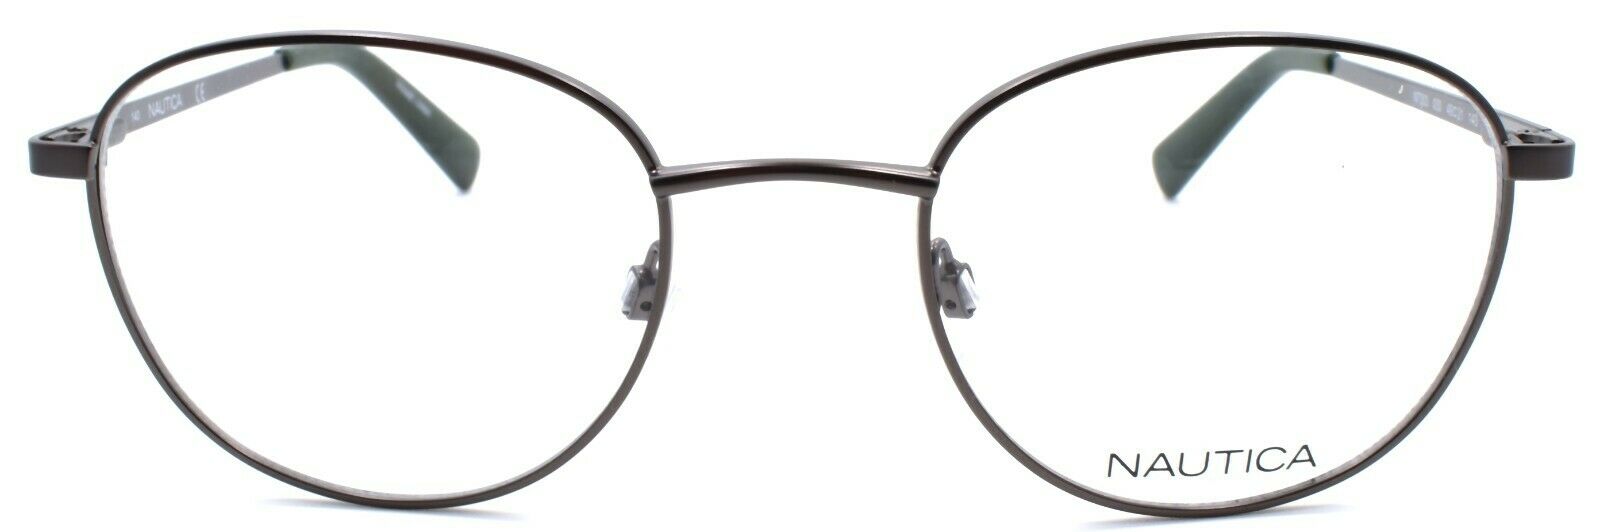 2-Nautica N7303 030 Men's Eyeglasses Frames 49-21-140 Satin Gunmetal-688940463125-IKSpecs